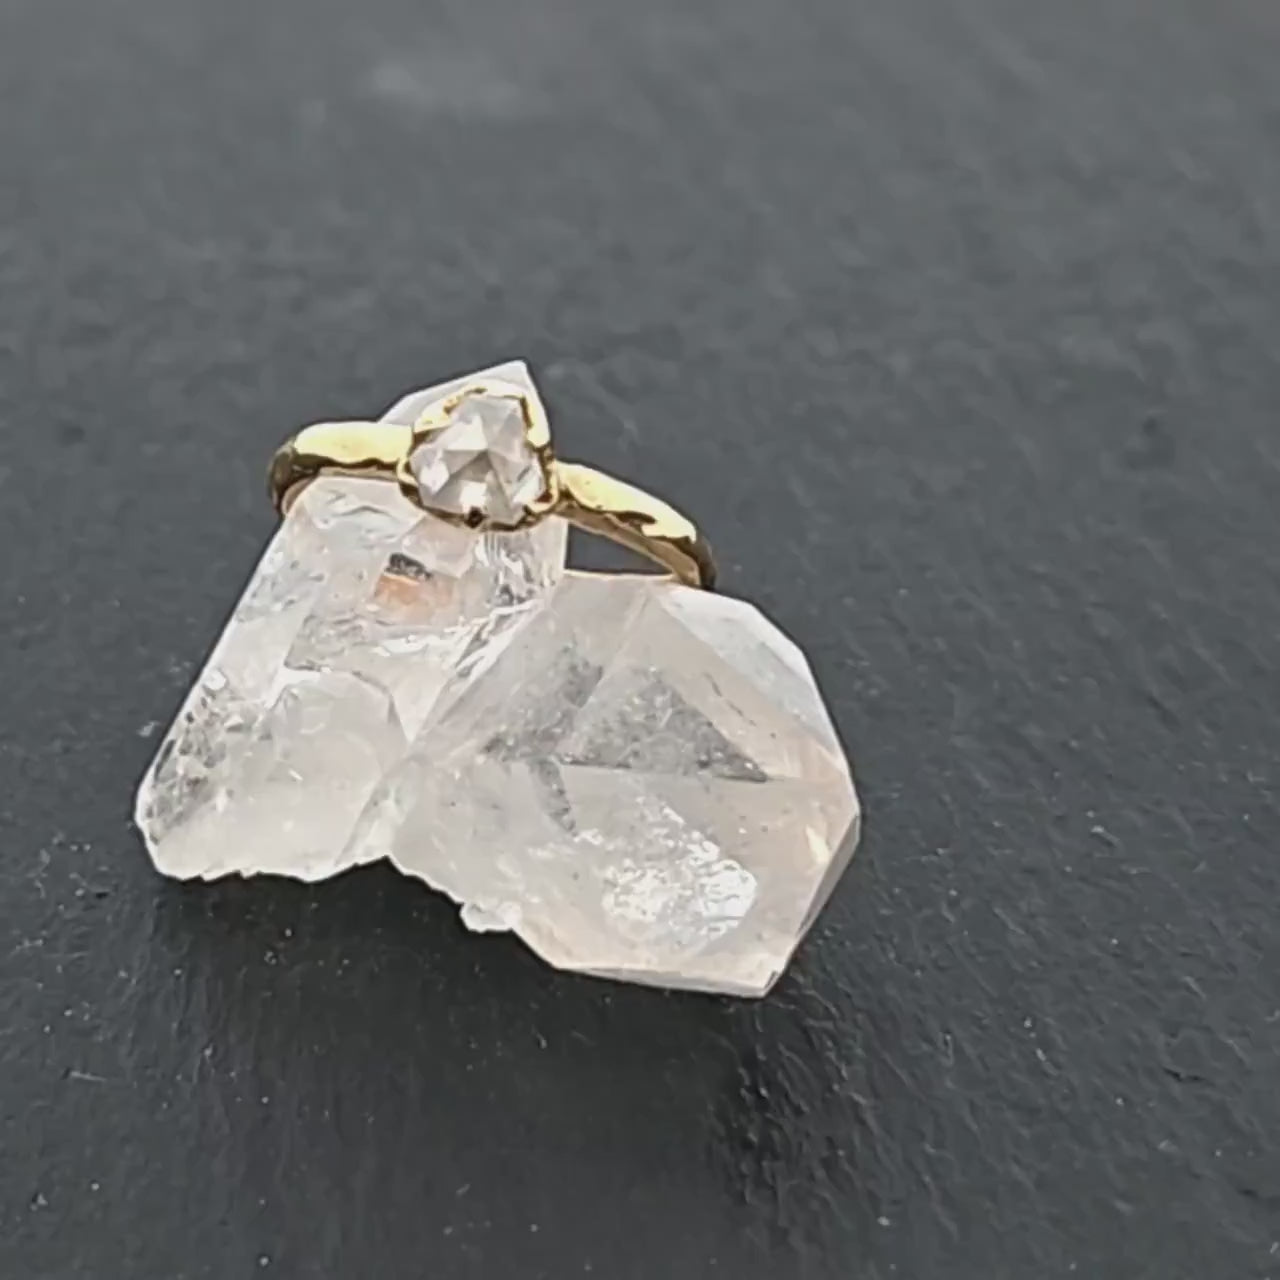 Fancy cut white Diamond Solitaire Engagement 18k yellow Gold Wedding Ring byAngeline 1395